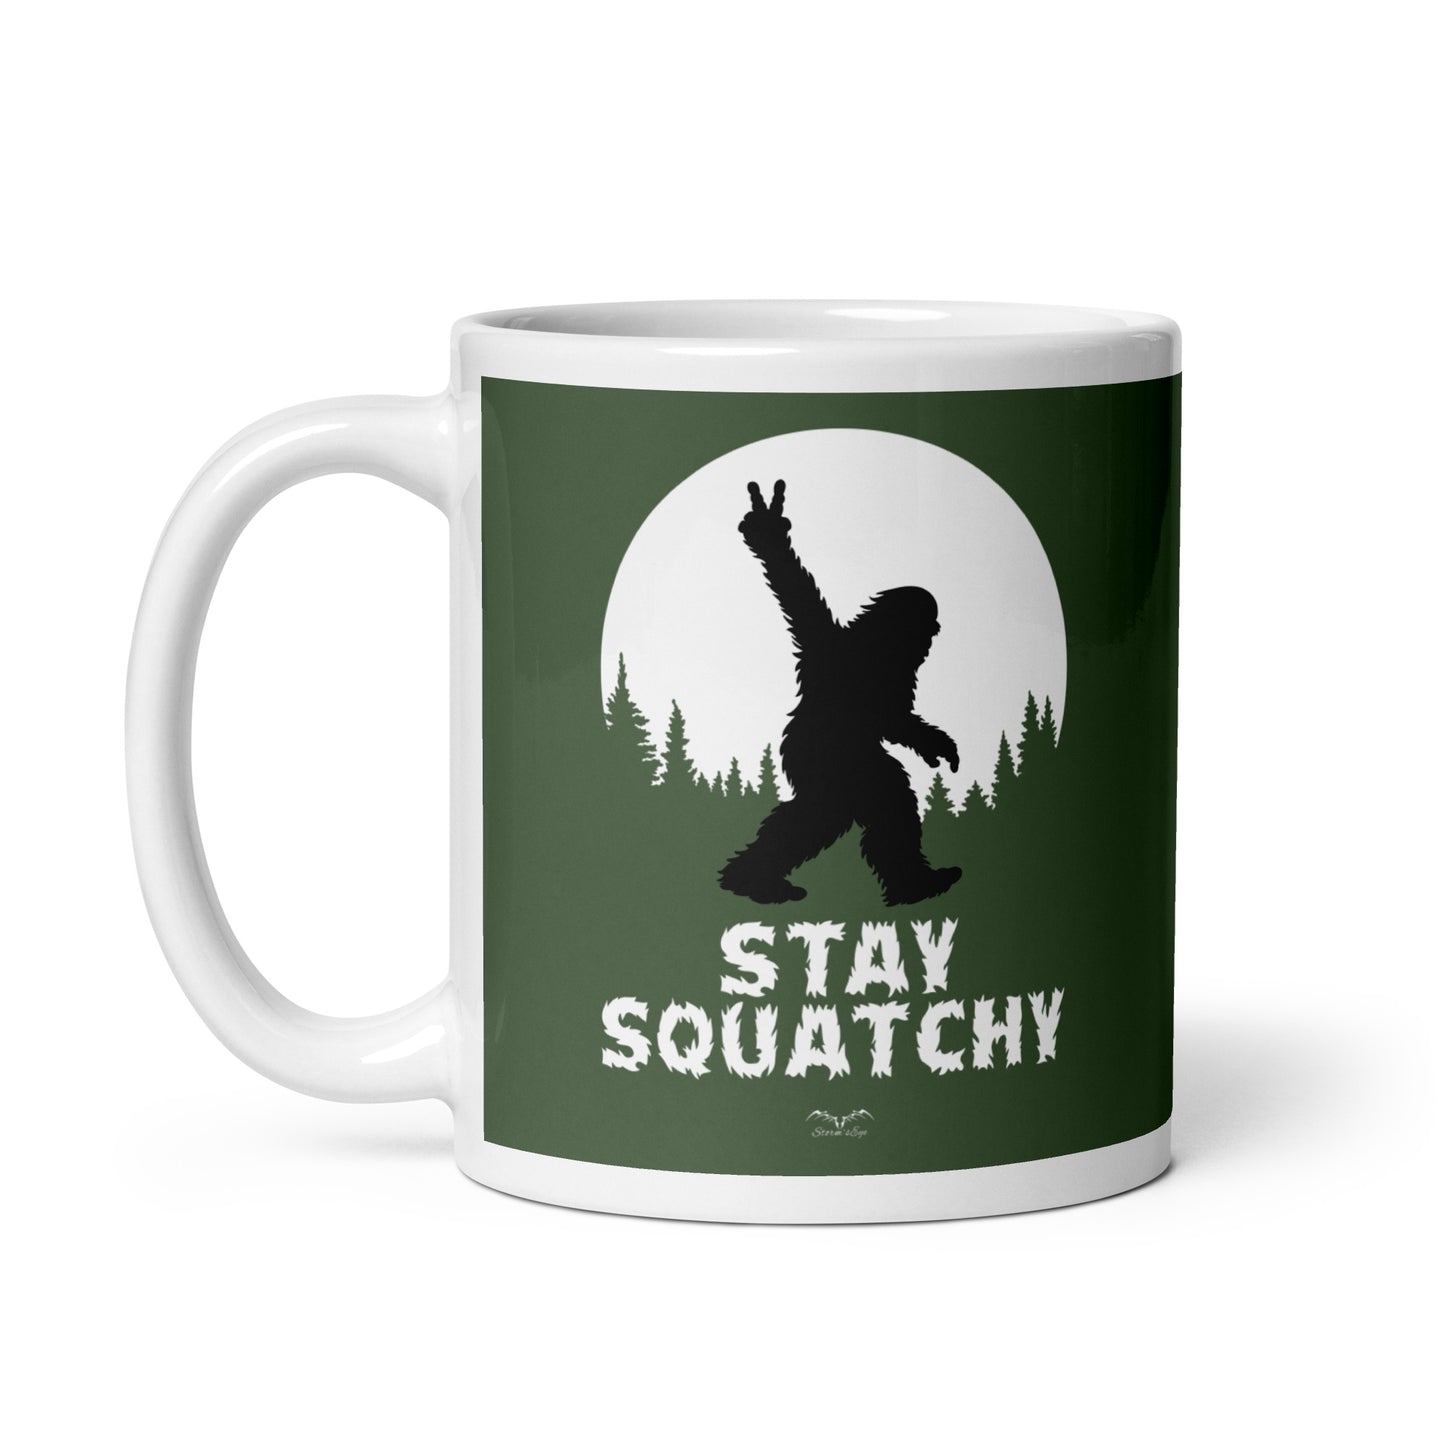 Sasquatch / Bigfoot Mug, Forest Green, by Stormseye Design